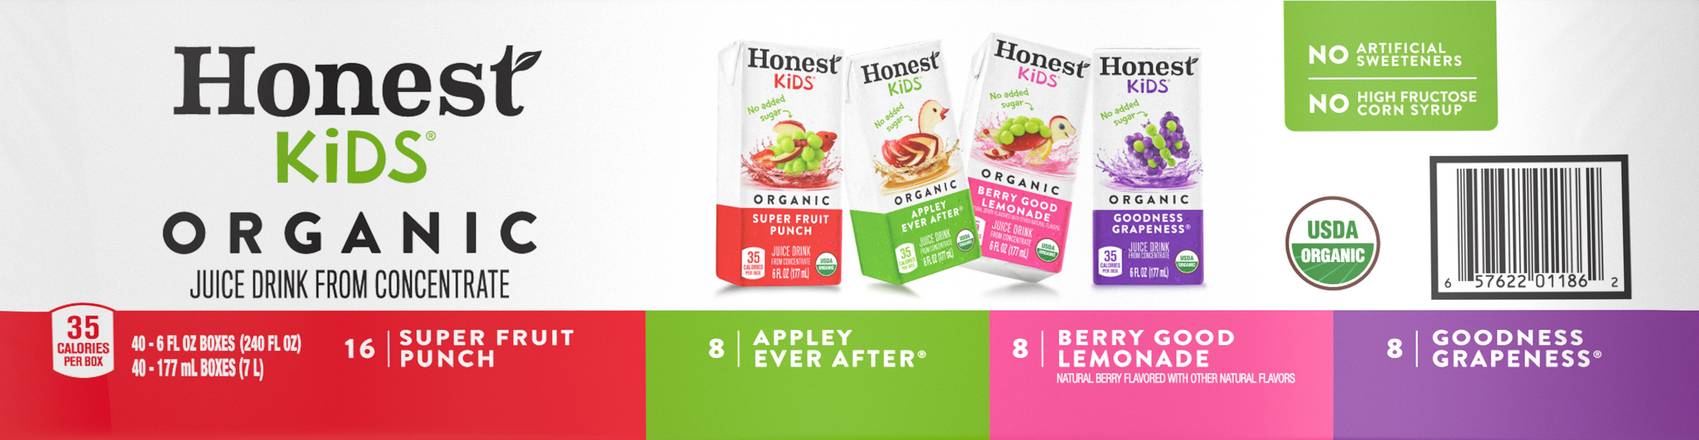 Honest Kids Organic Assorted Juice Drink (40 ct, 6 fl oz)